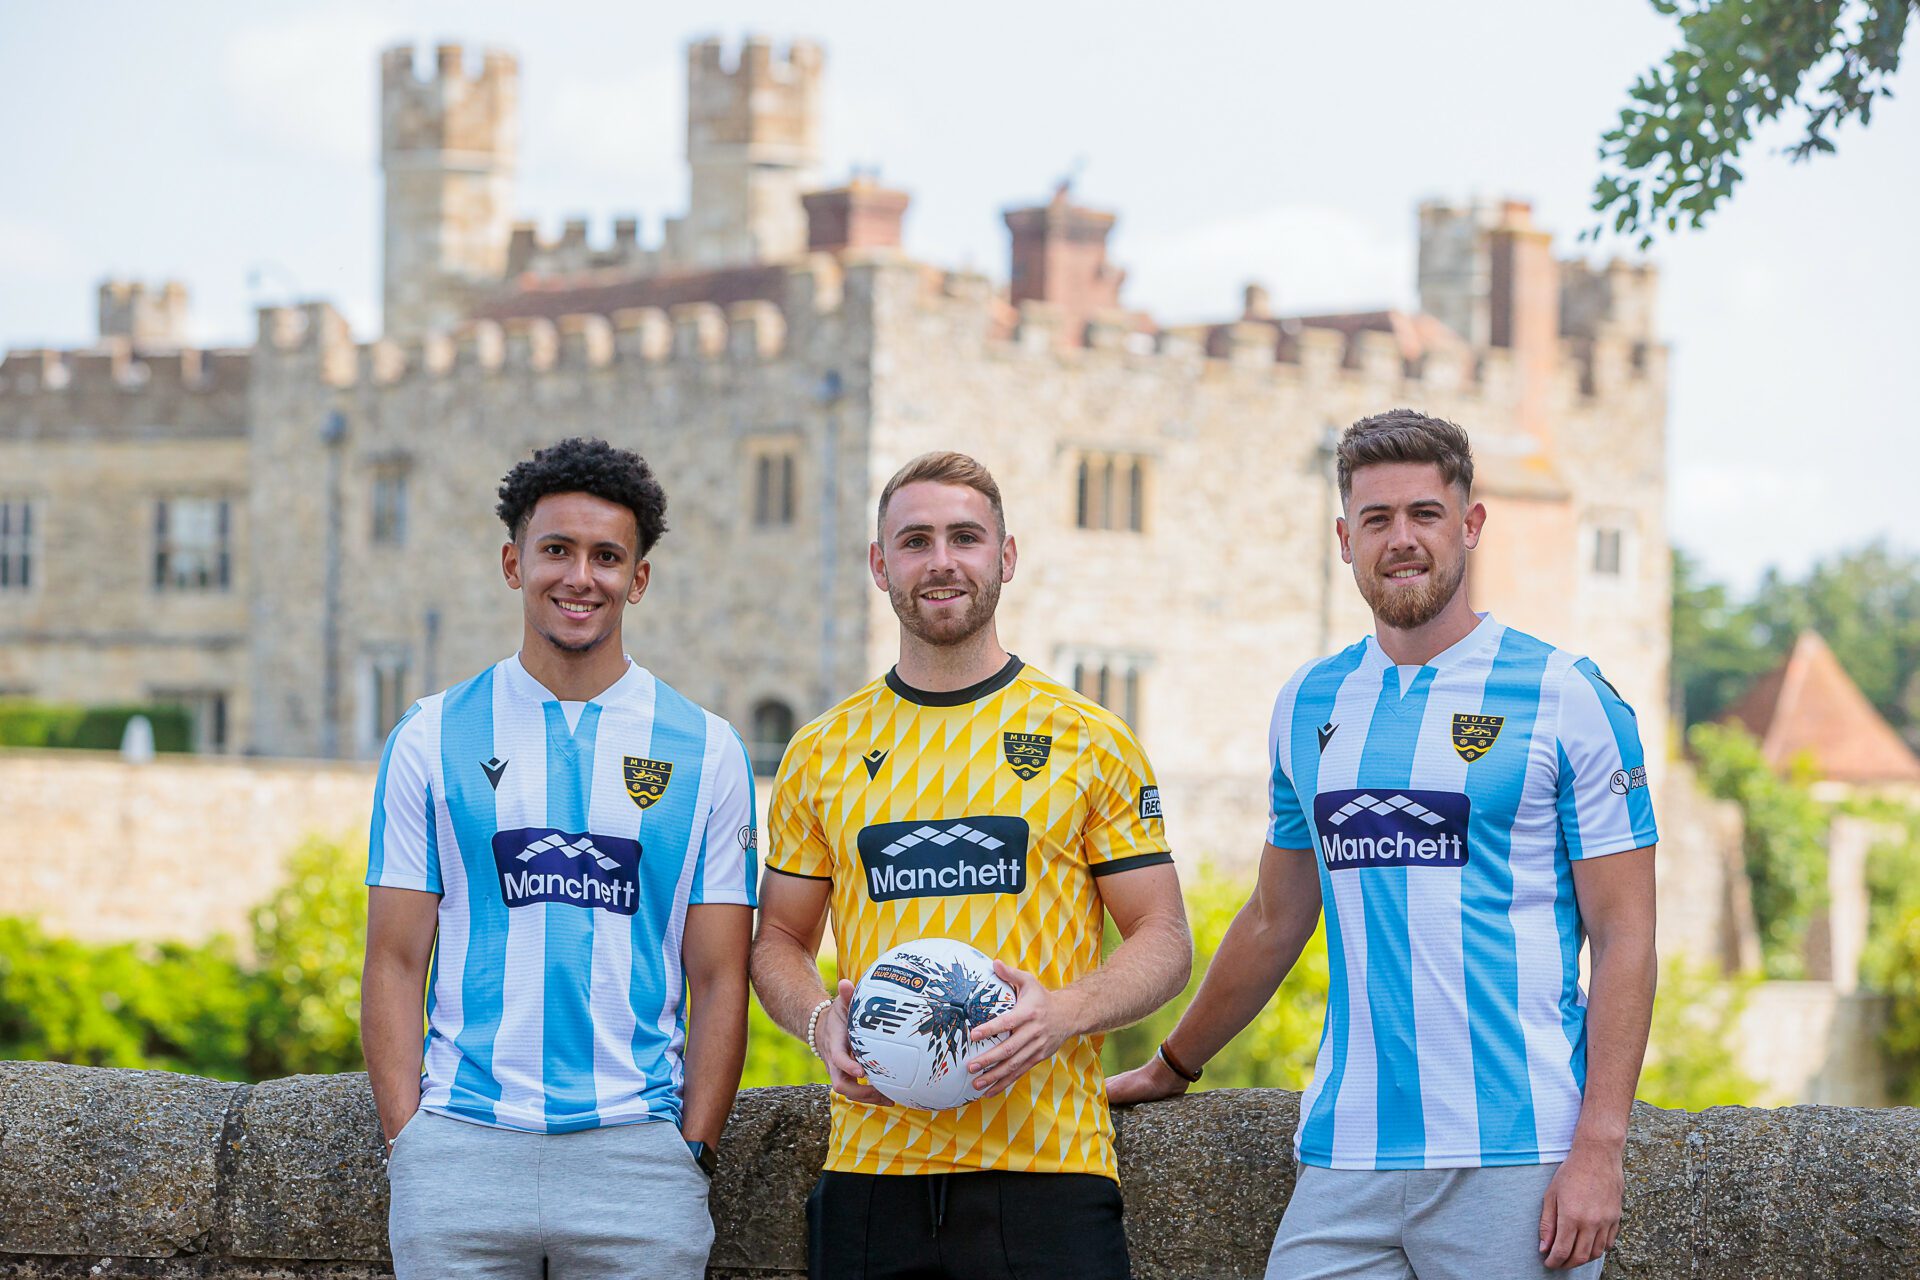 Maidstone FC Kit Launch at Leeds Castle